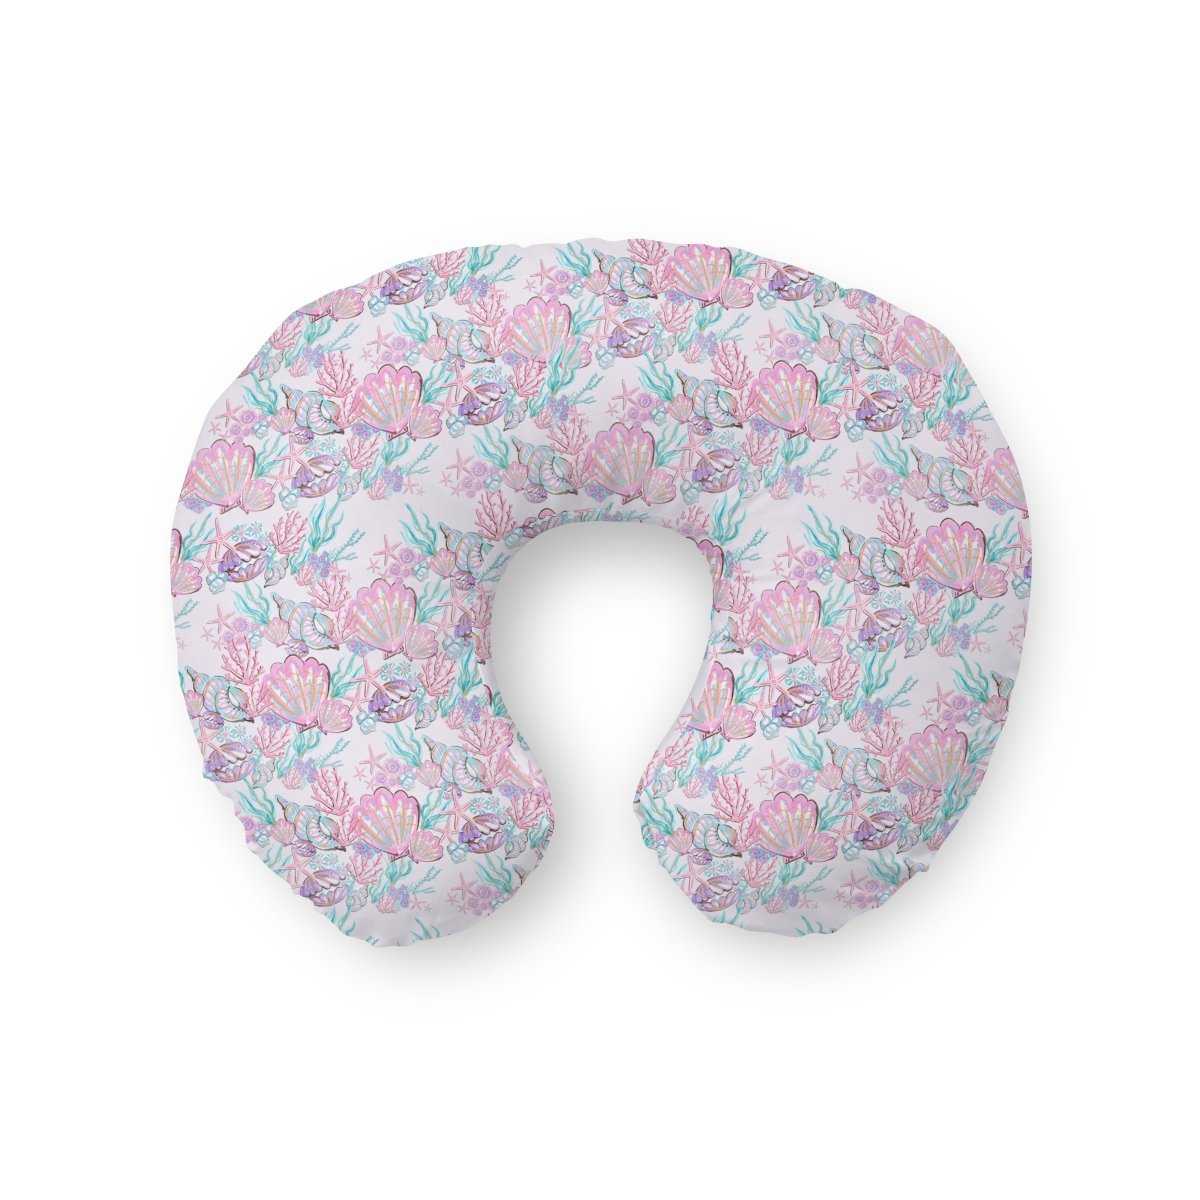 Mermaid Seashells Nursing Pillow Cover - gender_girl, Mermaid Seashells, Theme_Ocean